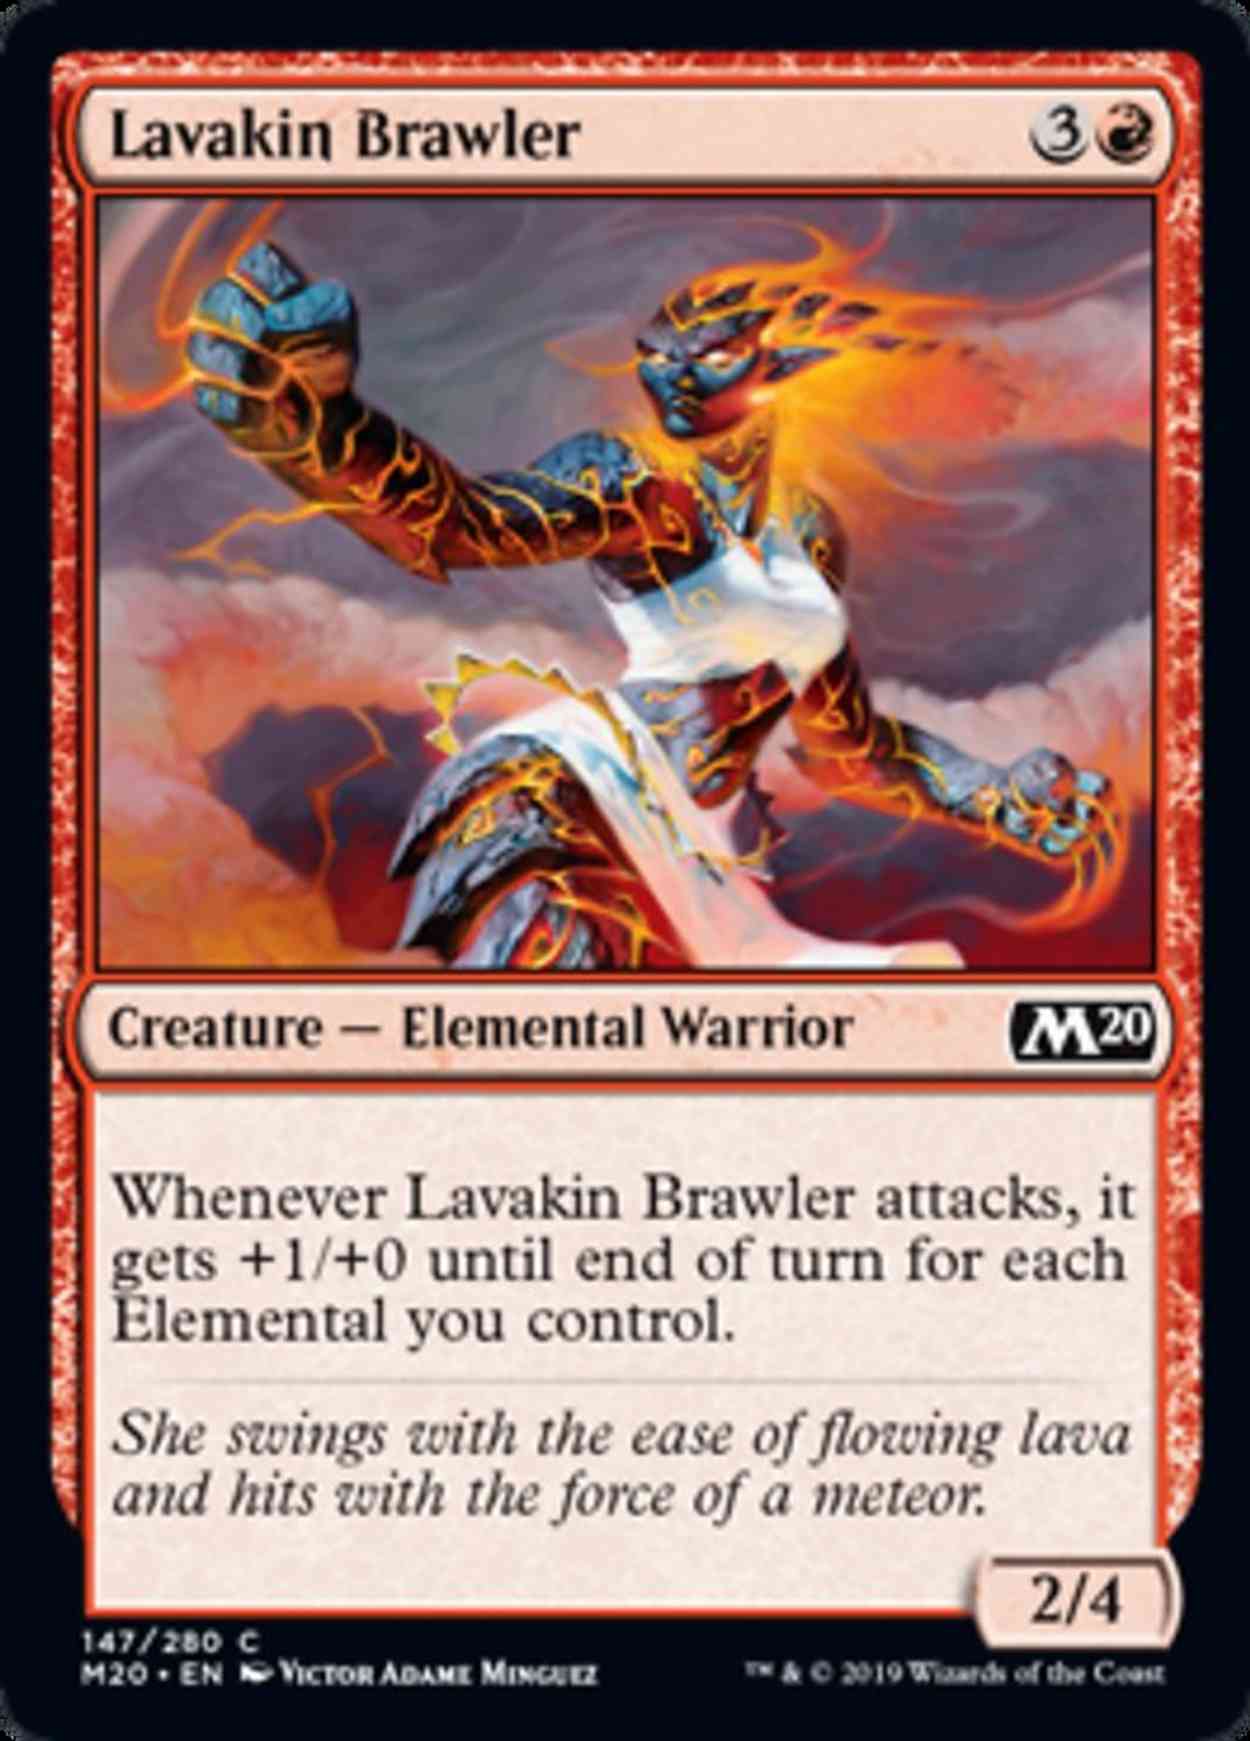 Lavakin Brawler magic card front